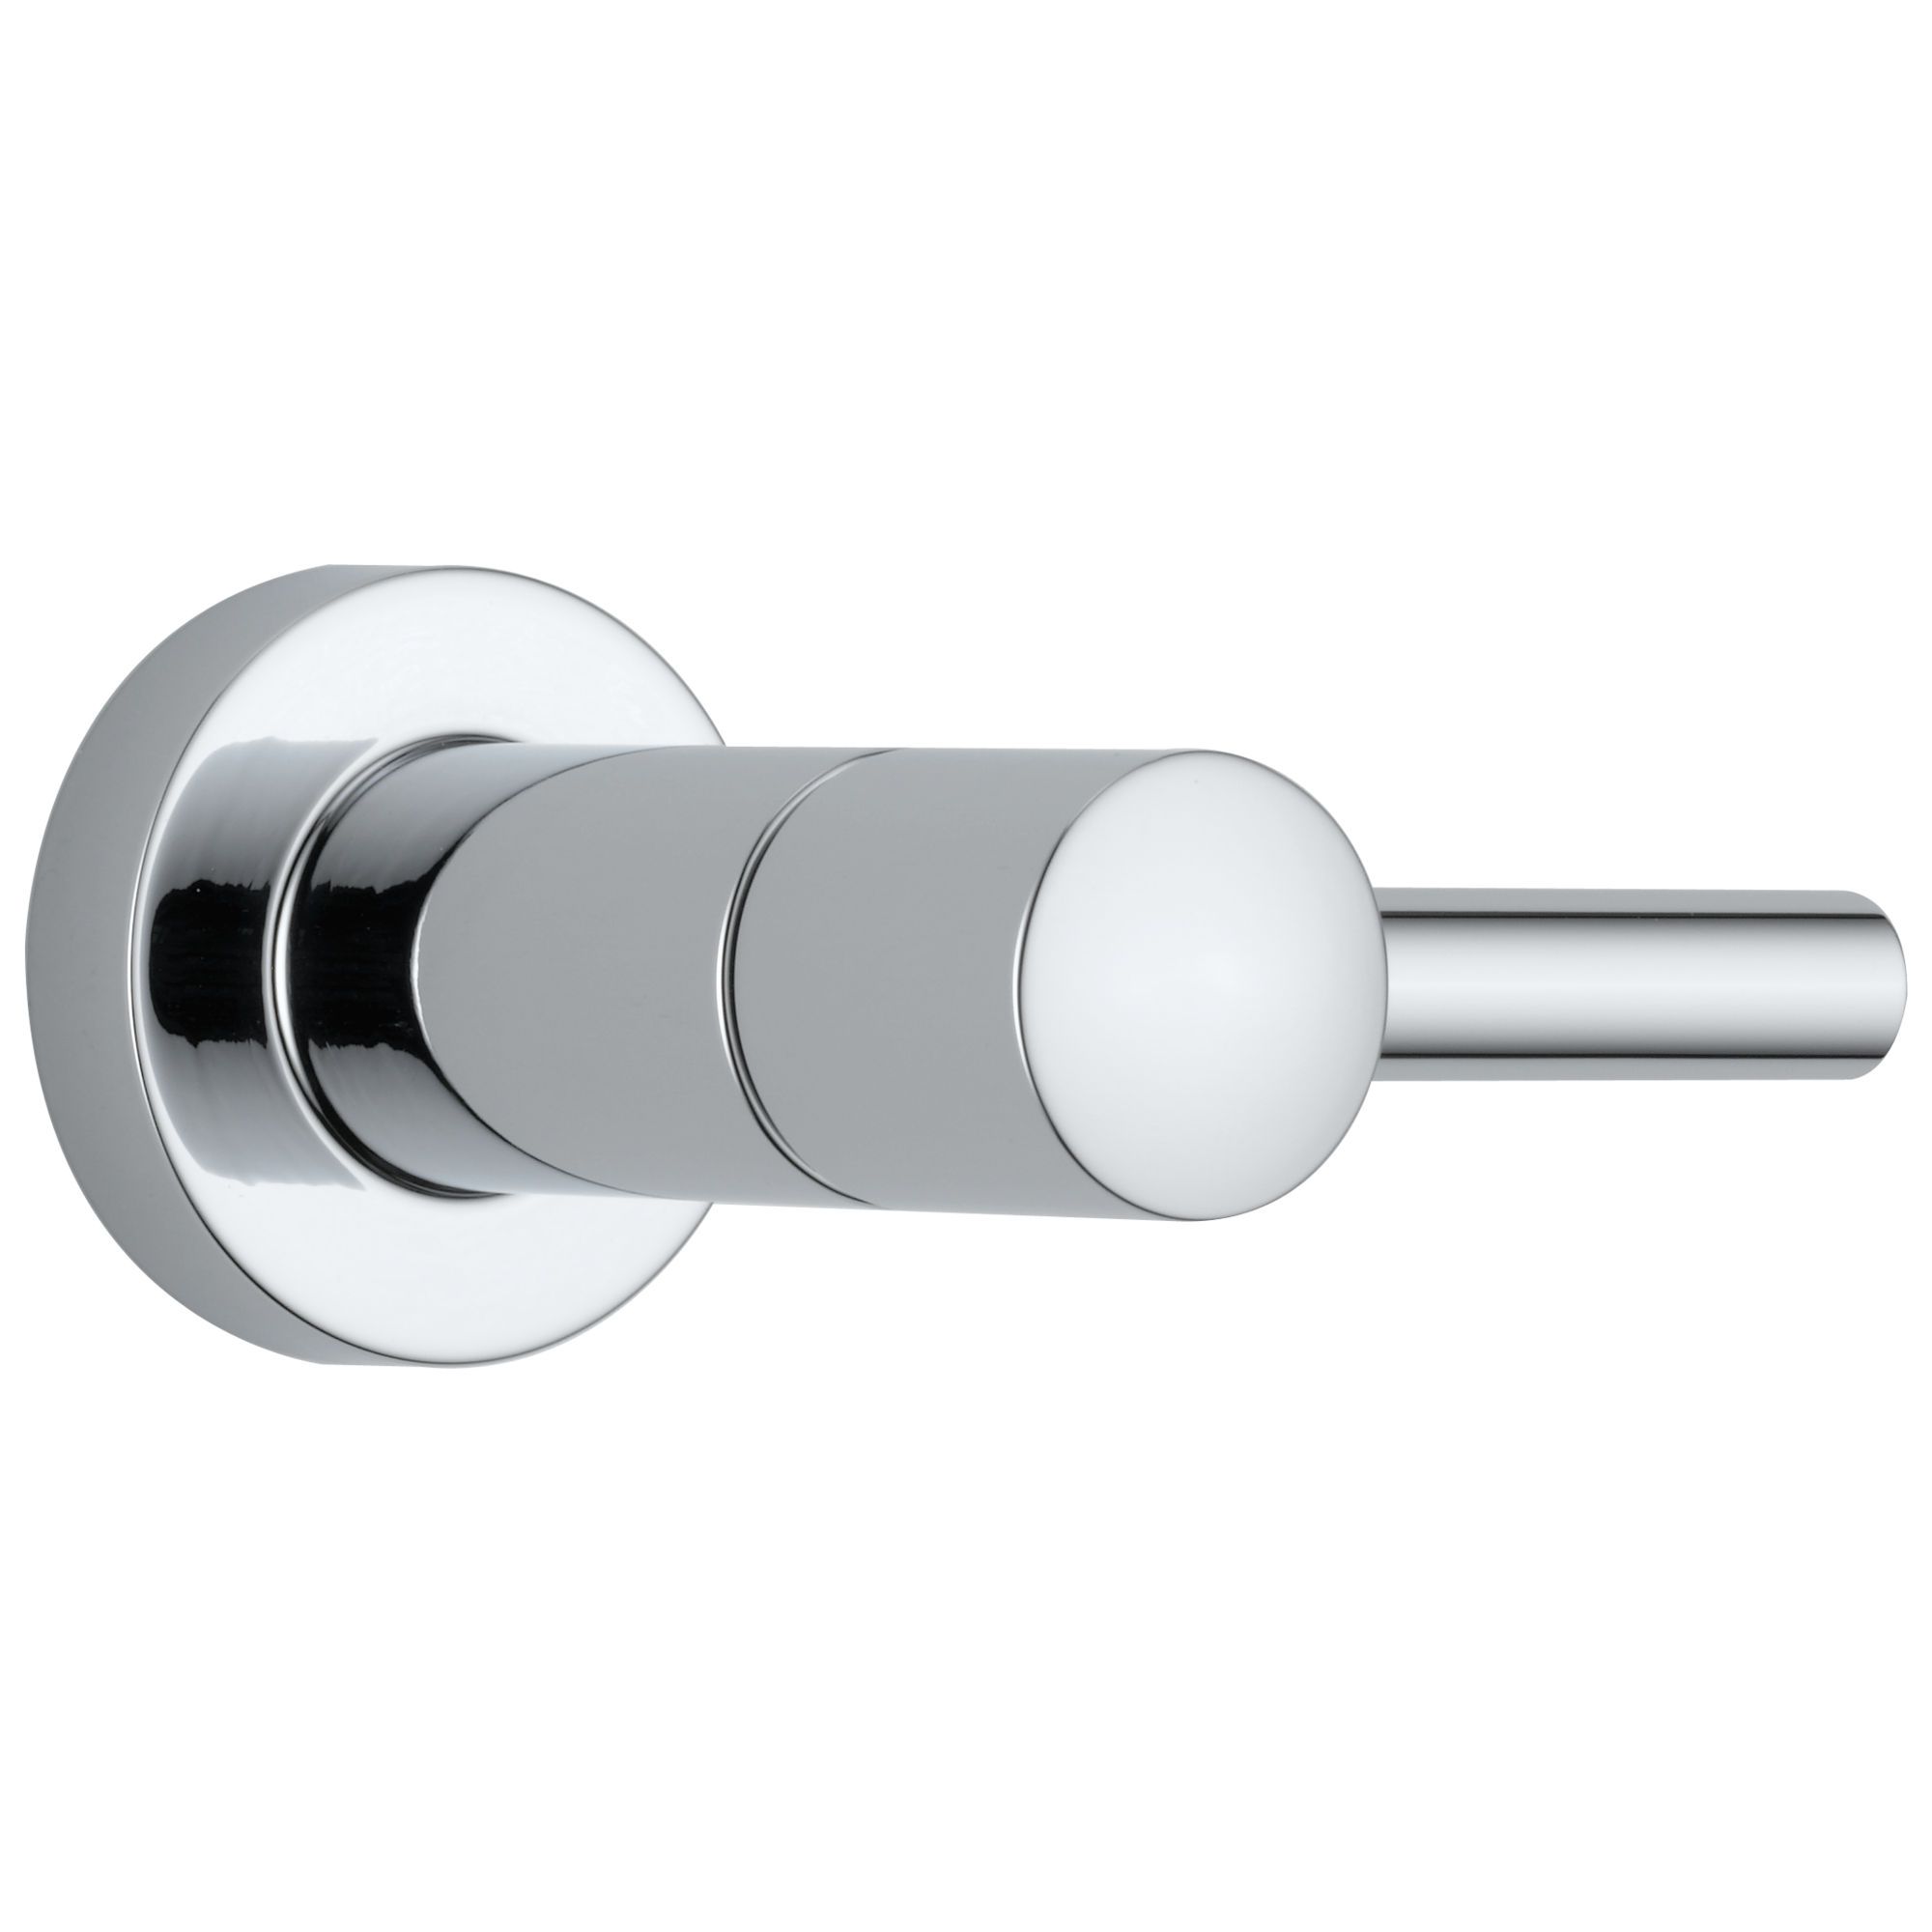 chrome lever handle